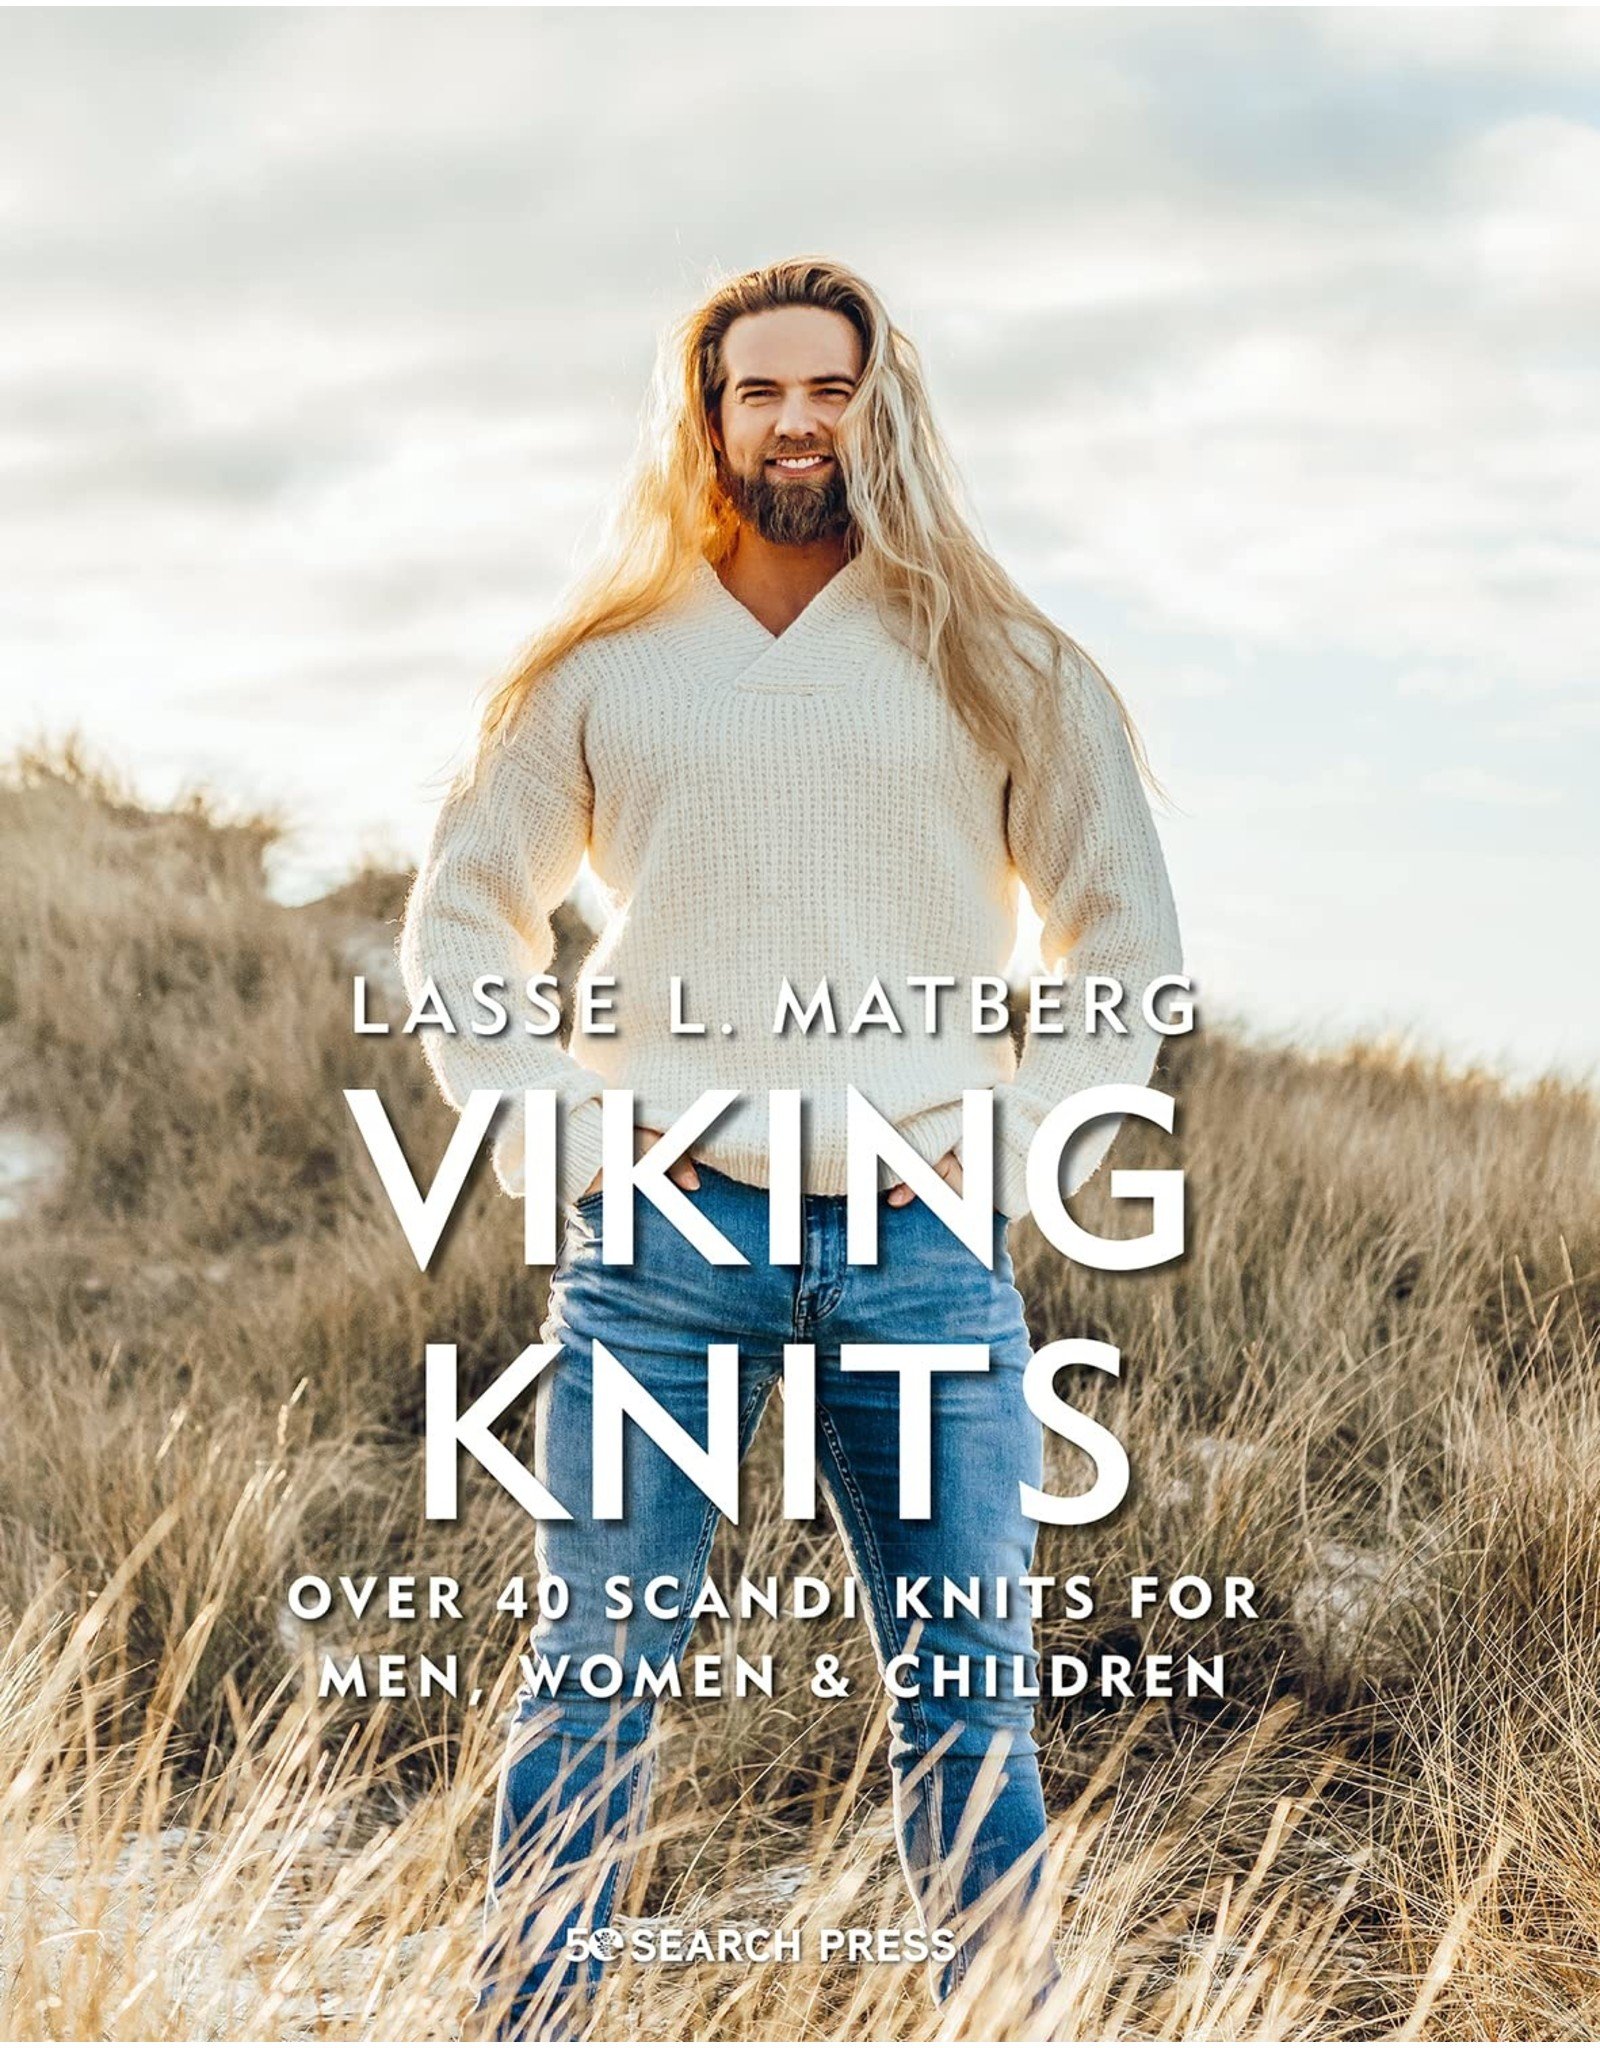 Lasse L. Matberg Viking Knits by Lasse L. Matberg